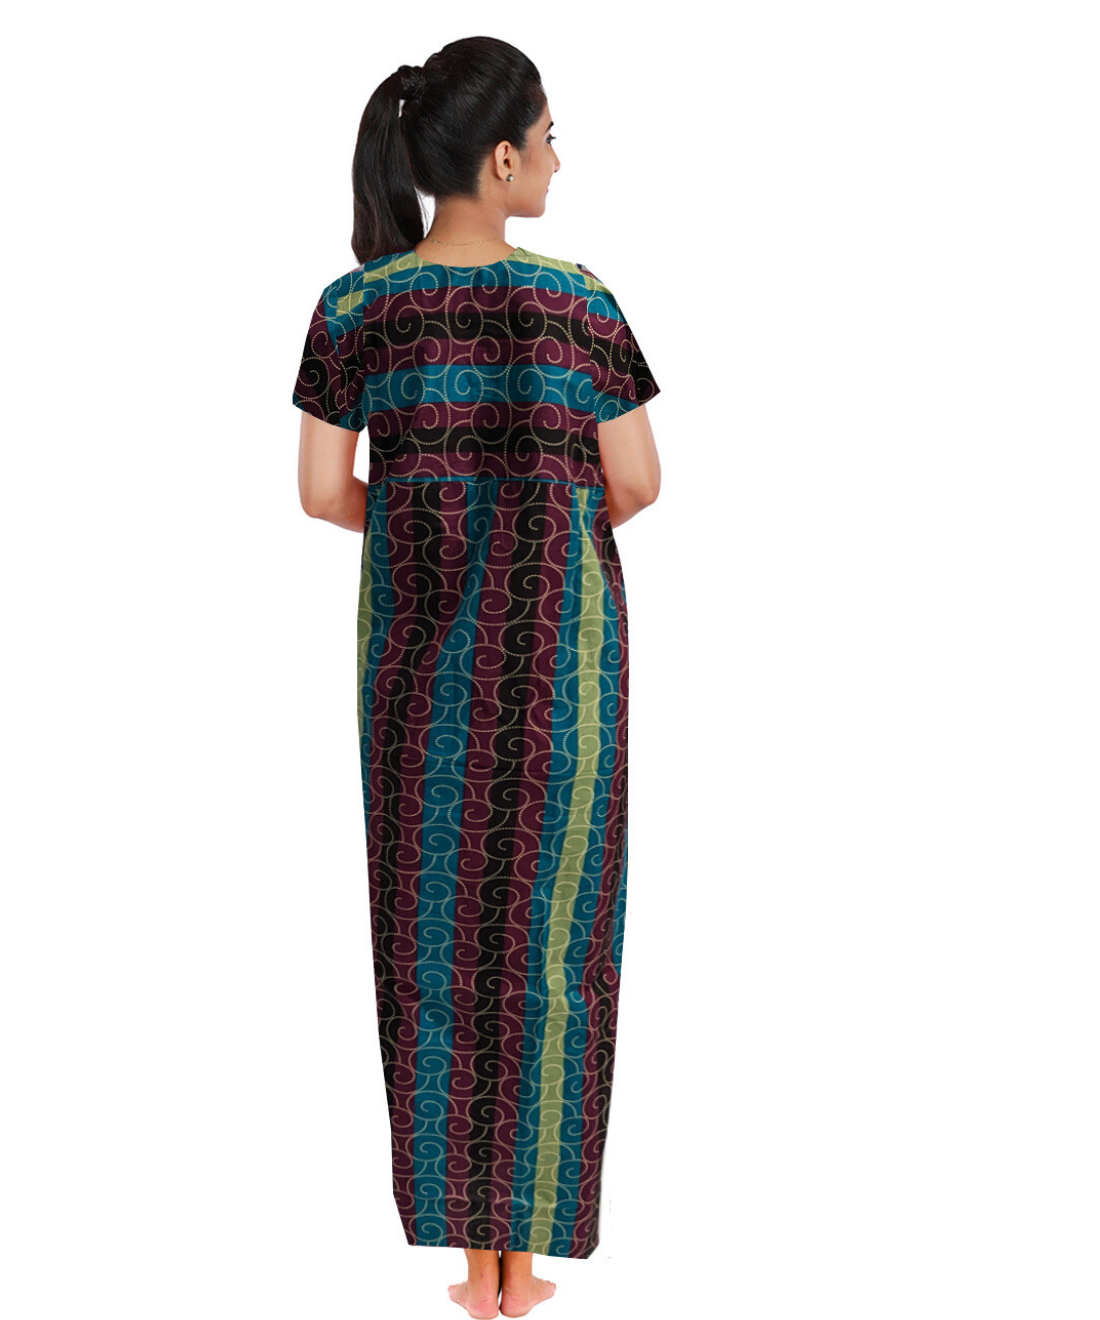 New MANGAI Premium Regular Fit Cotton Nighties - All Over Printed Stylish Nightwear for Stylish Women | Beautiful Nighties for Stylish Women's | Shrinkage Free Nighties | New CHUDI Cut Model